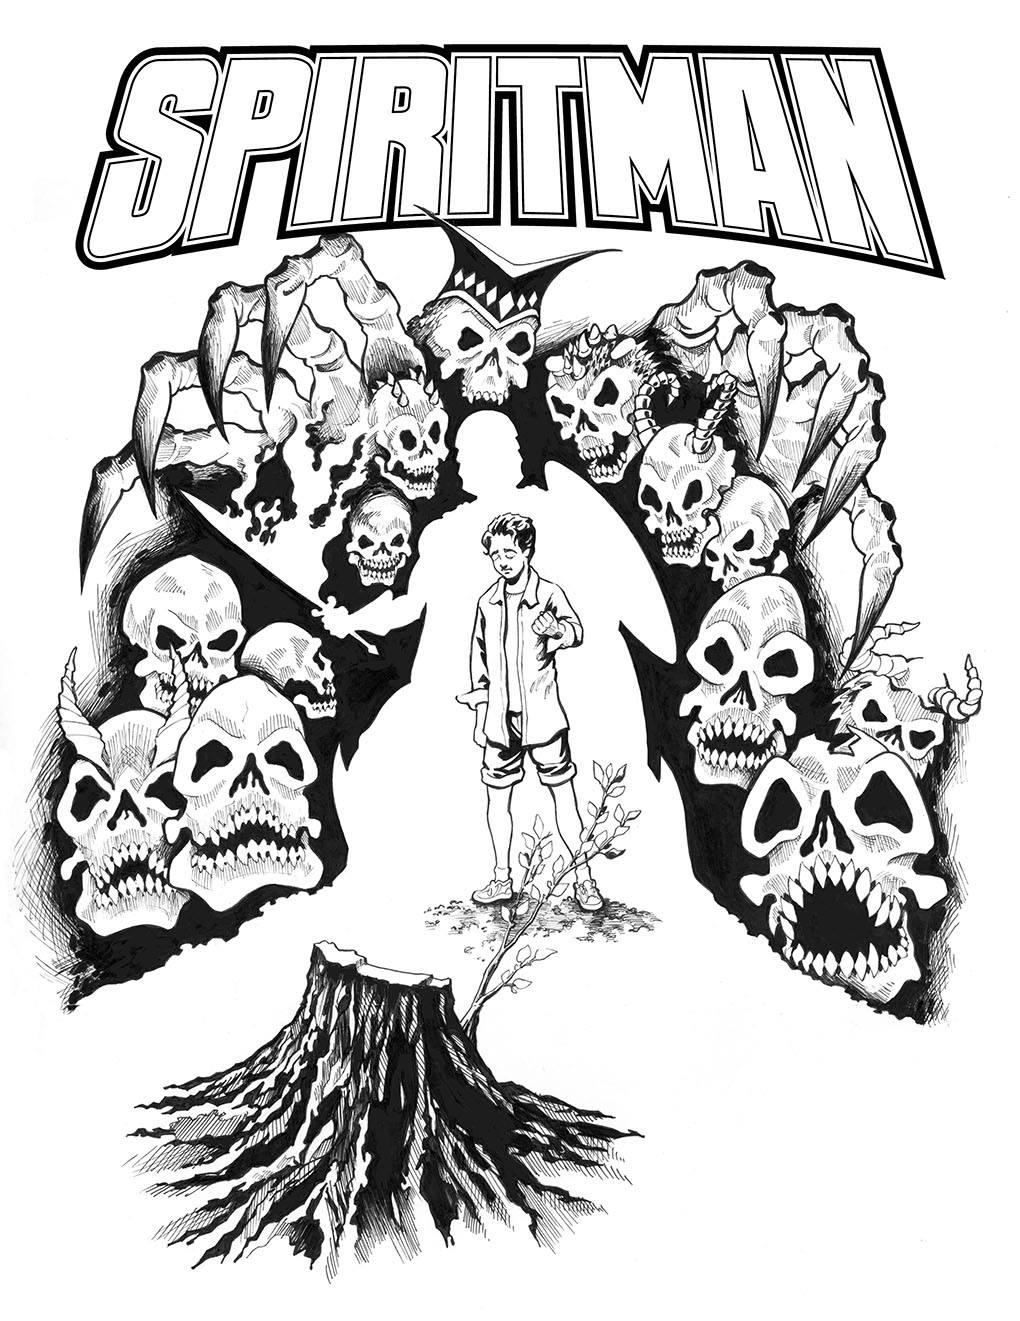 Christian Superhero Comics